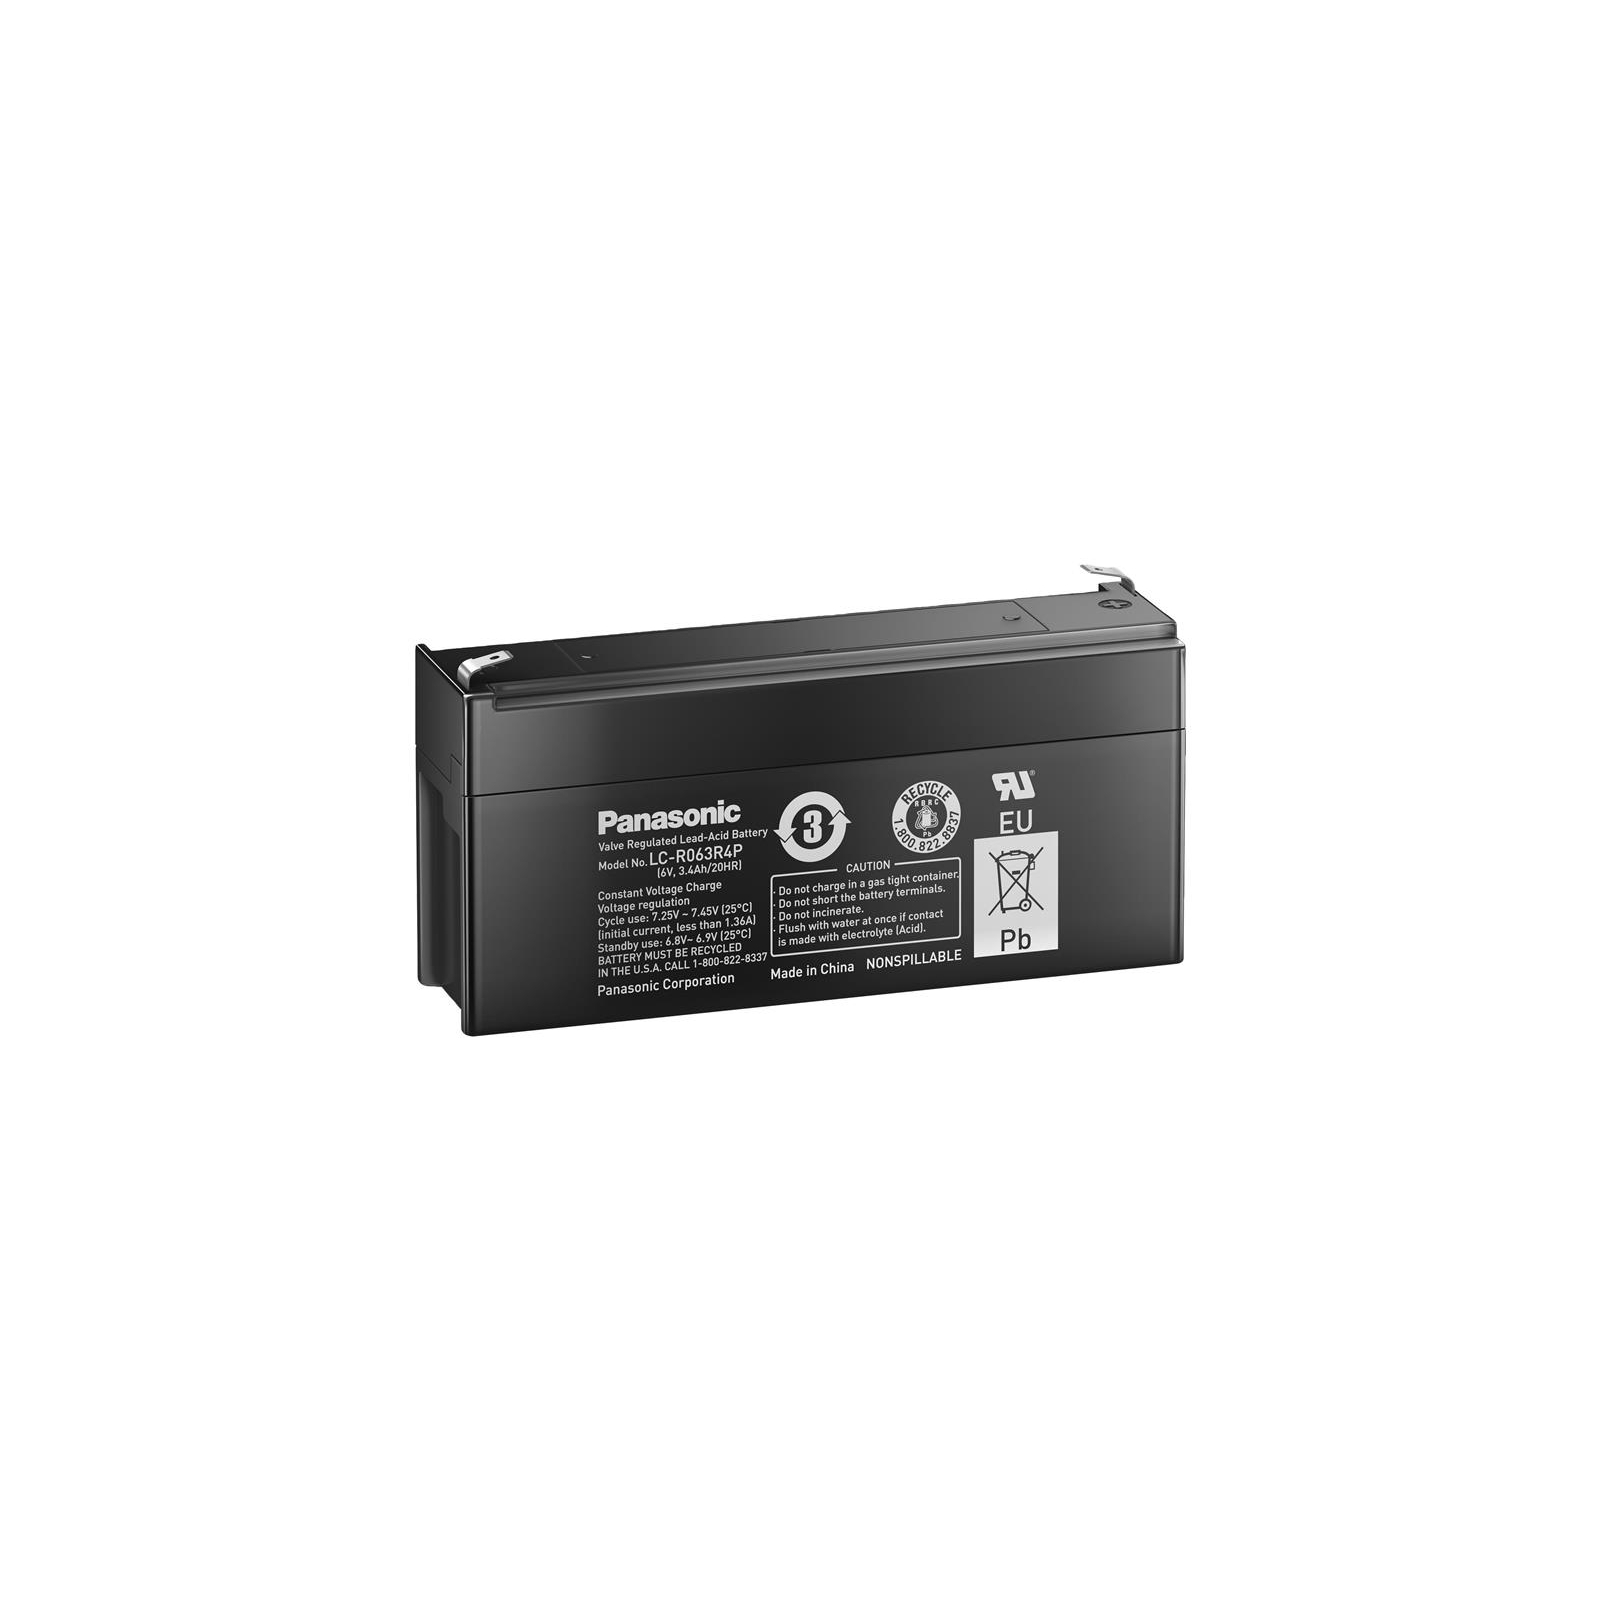 Батарея к ИБП Panasonic 6V 3.4Ah (LC-R063R4P)